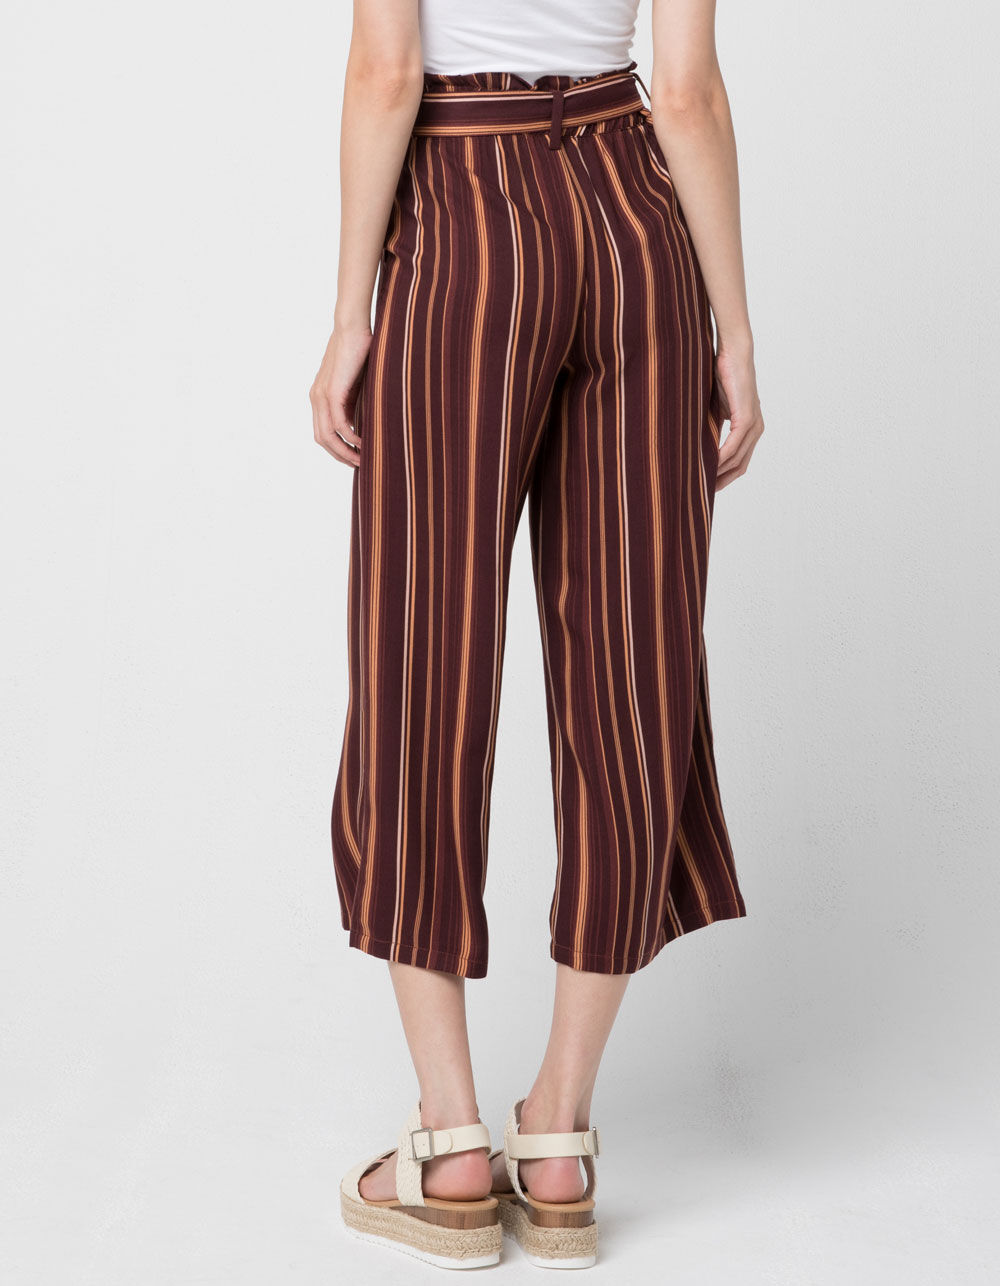 SKY AND SPARROW Stripe Crop Womens Wide Leg Pants - BURGUNDY COMBO | Tillys